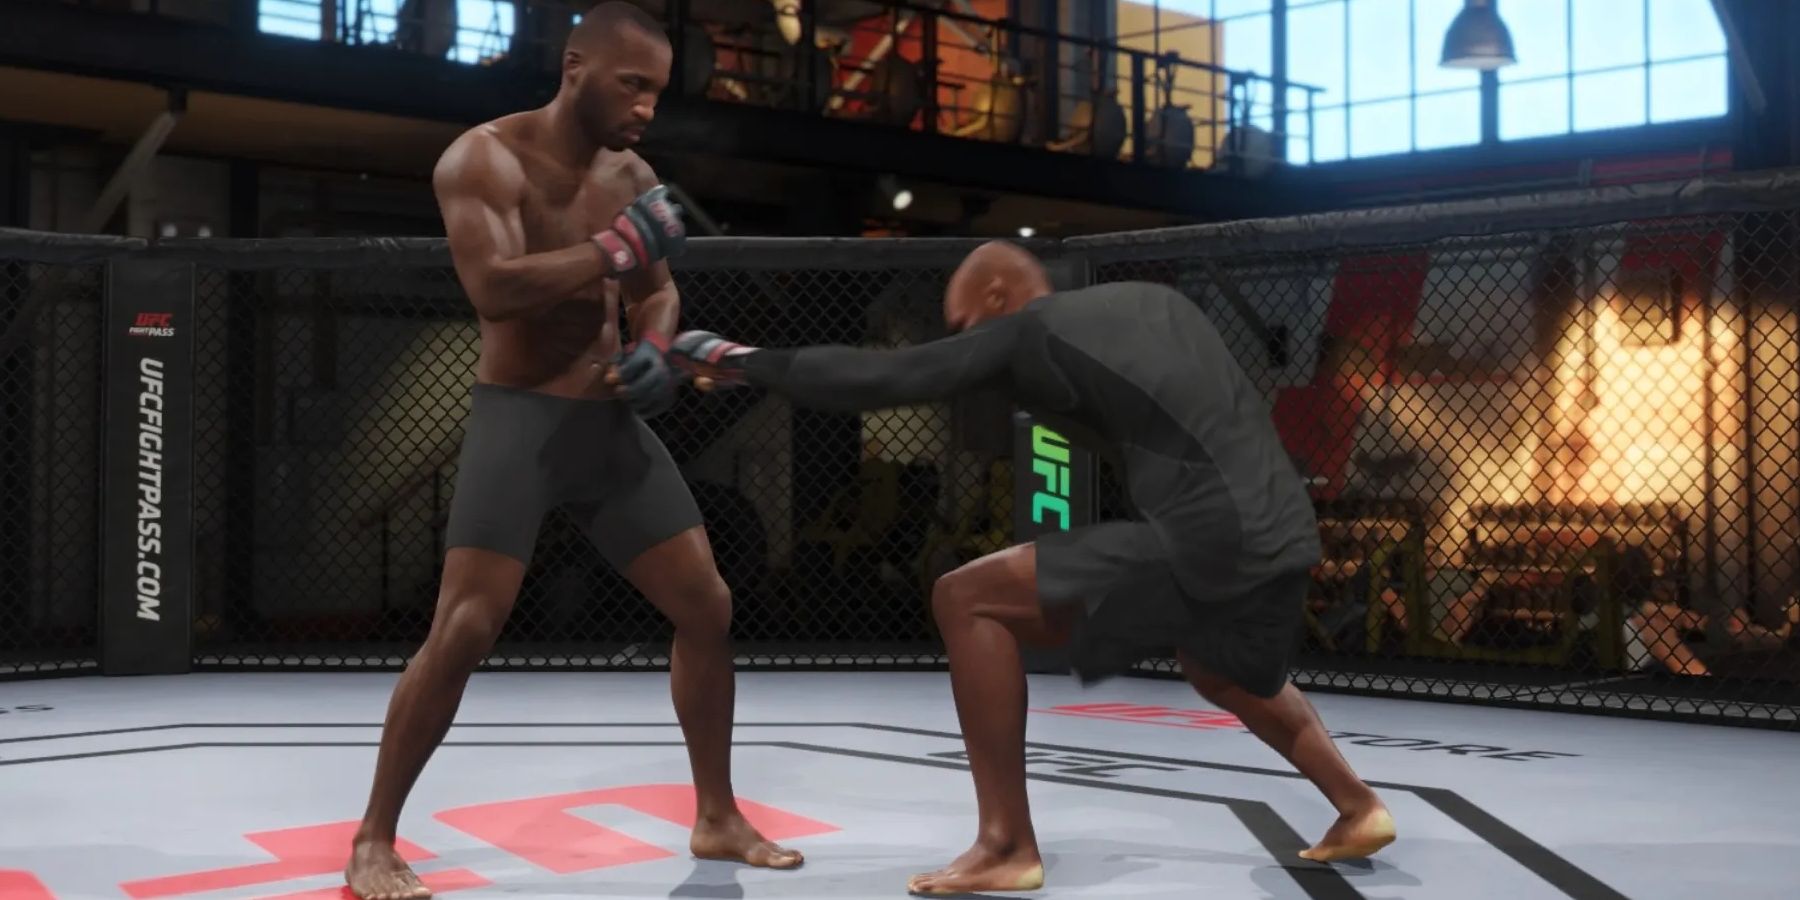 UFC Usman throwing a bodyshot against Edwards in the gym